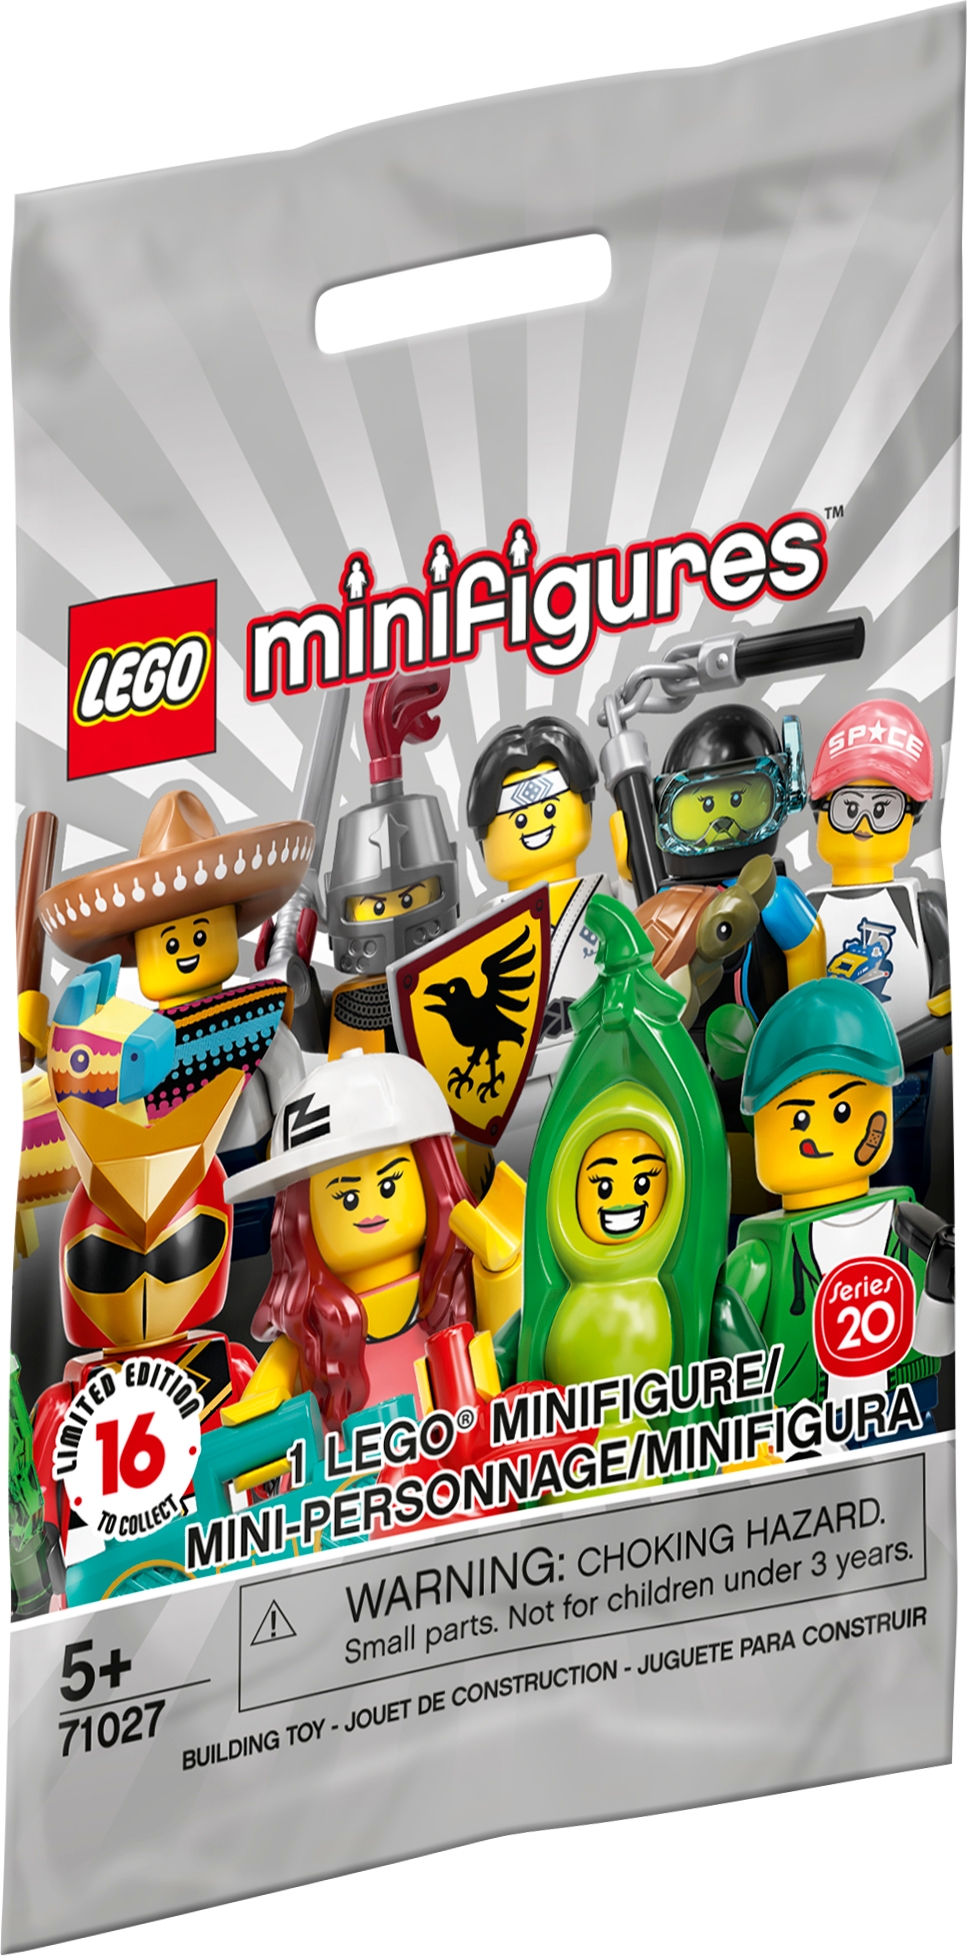 Minifigures Lego Serie 20 | vlr.eng.br